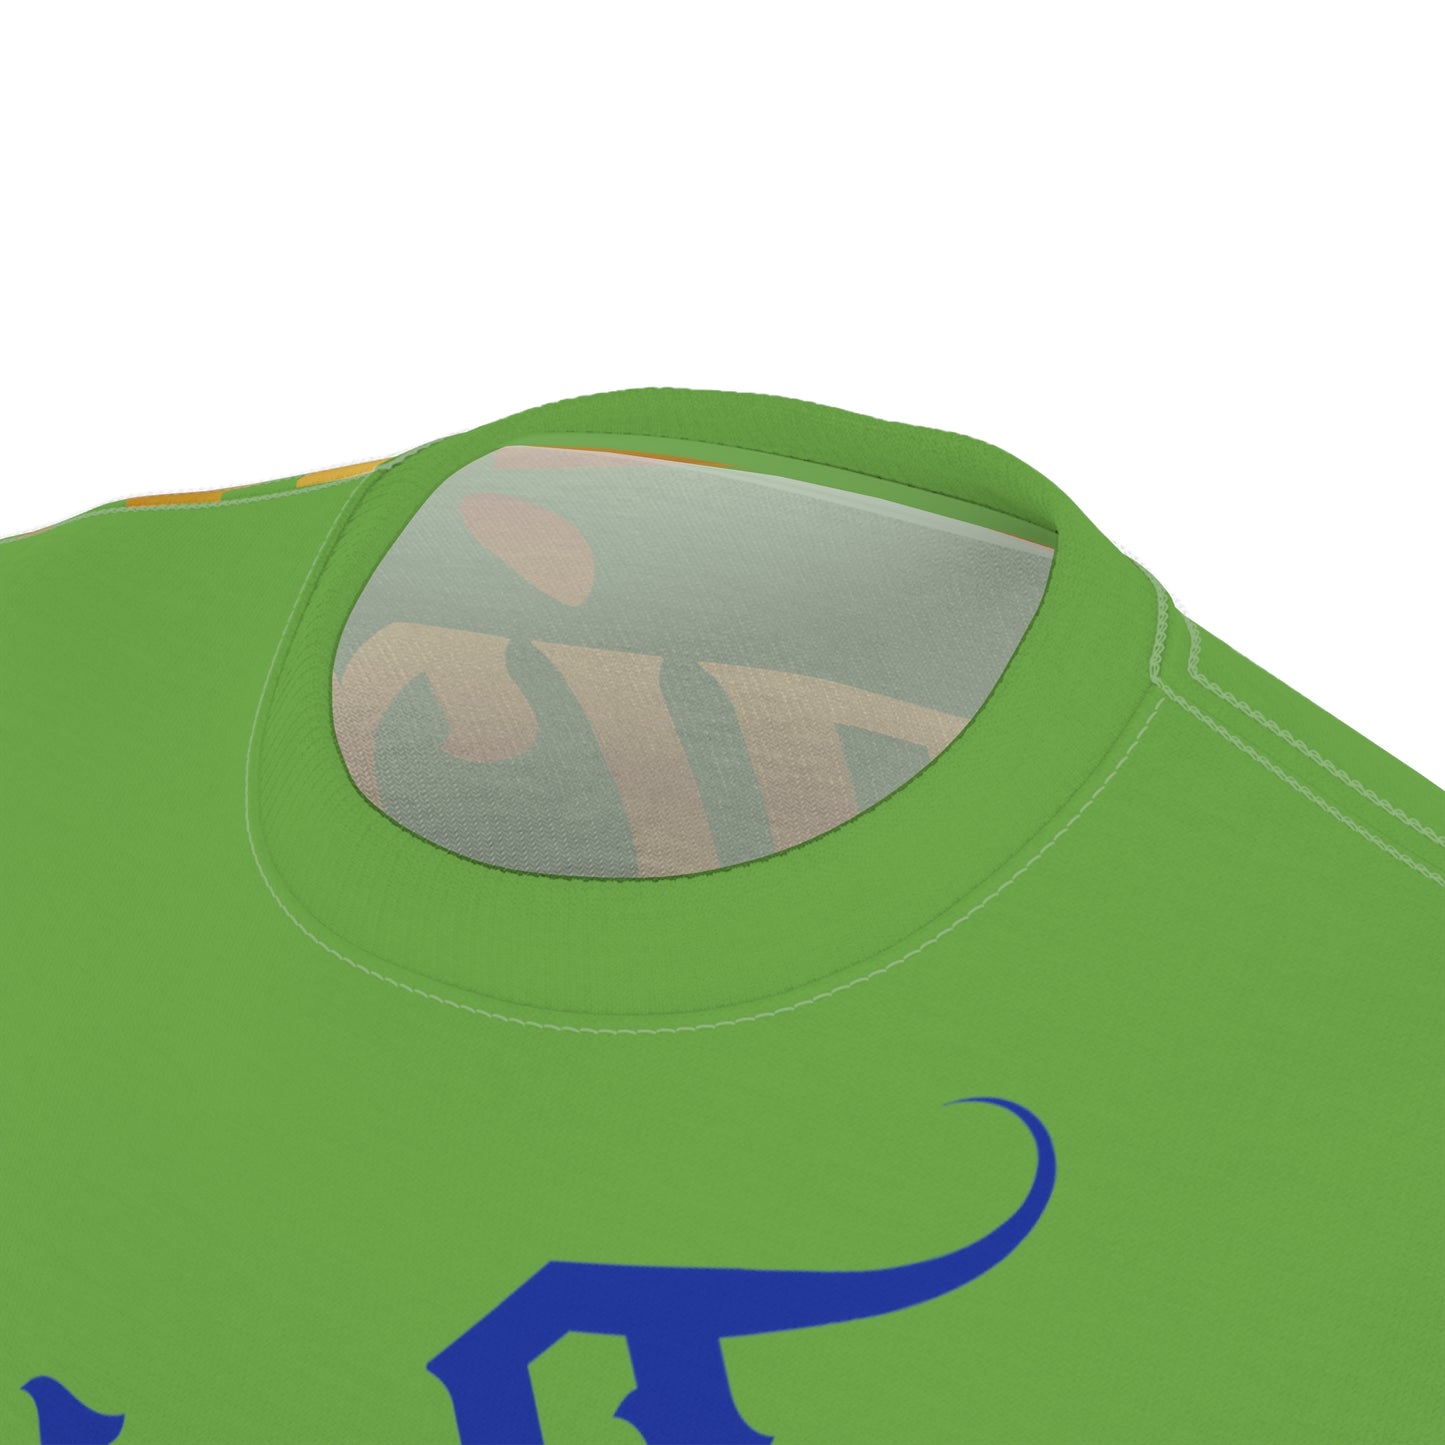 Green Gator Drip Exclusive Supa-Heavy Excess-Stunna Flex Alligator Playuz Limited Edition OG Multi-Logo Rich Daddy “A Hatuh Stone Frozen In His Envy" Unisex Cut & Sew Playuz Tee